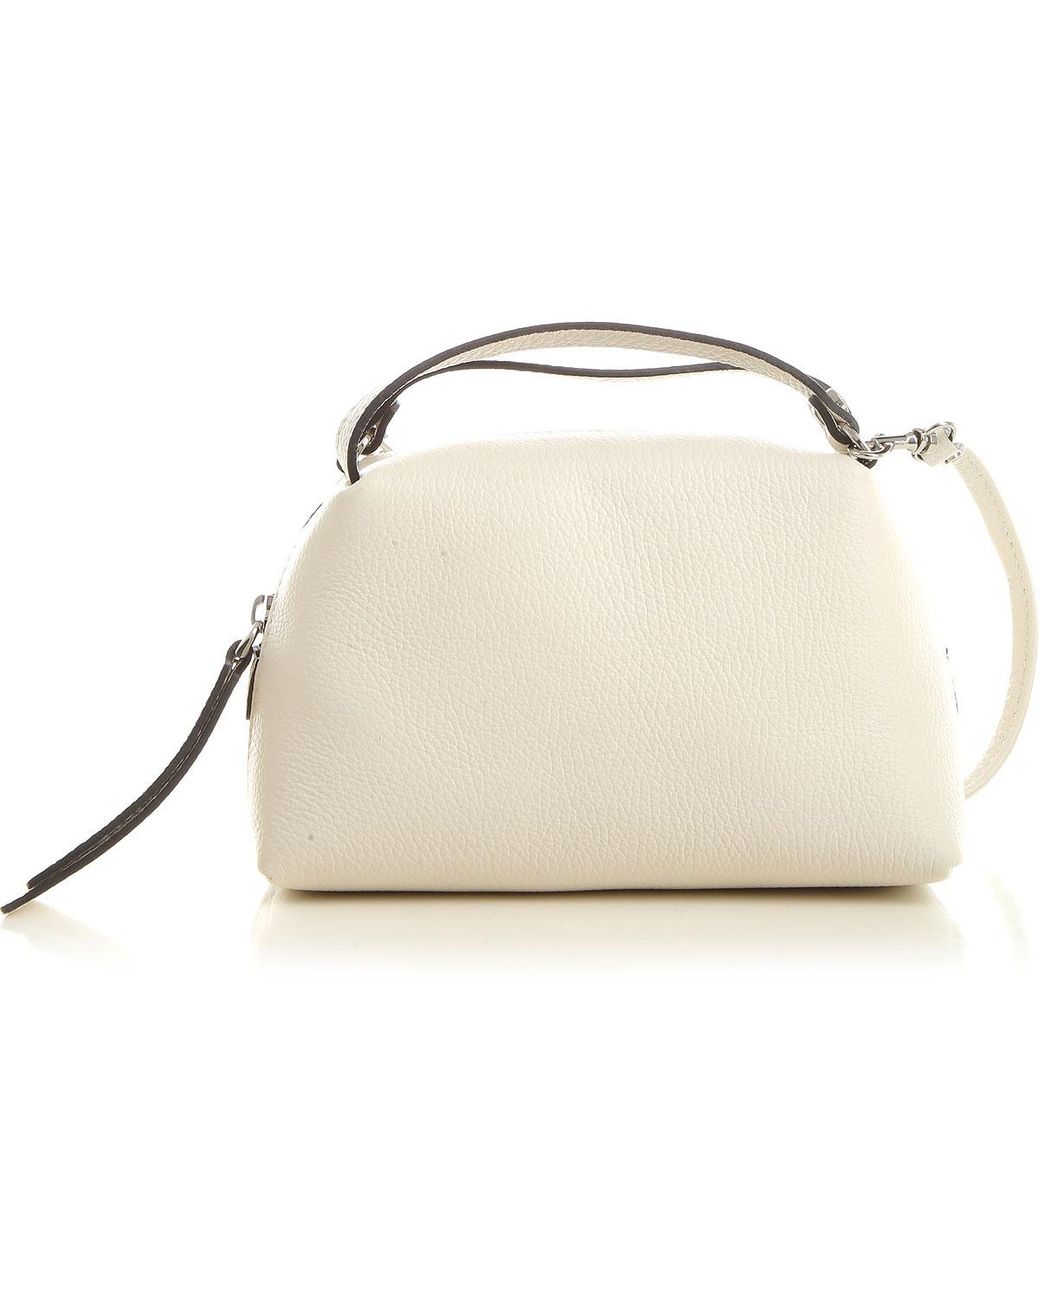 Gianni Chiarini Top Handle Handbag in White - Lyst